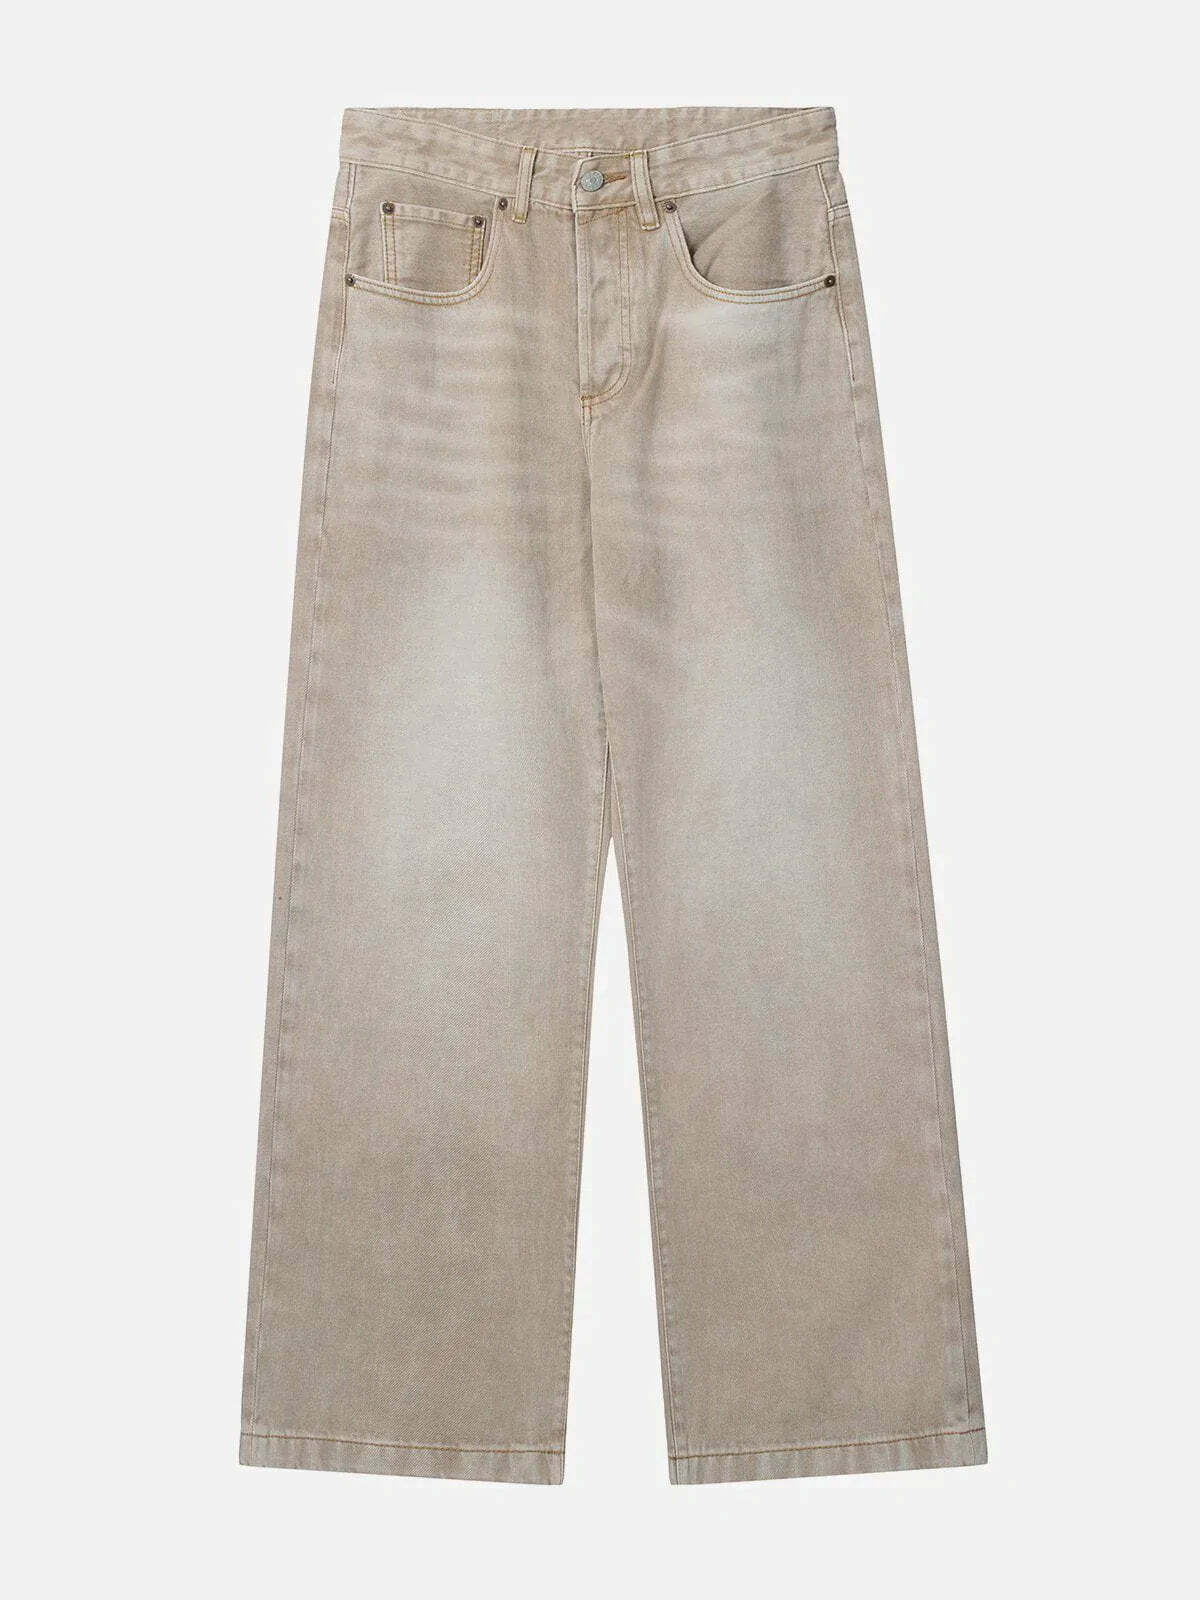 wrinkled washed jeans edgy & urban denim 1053